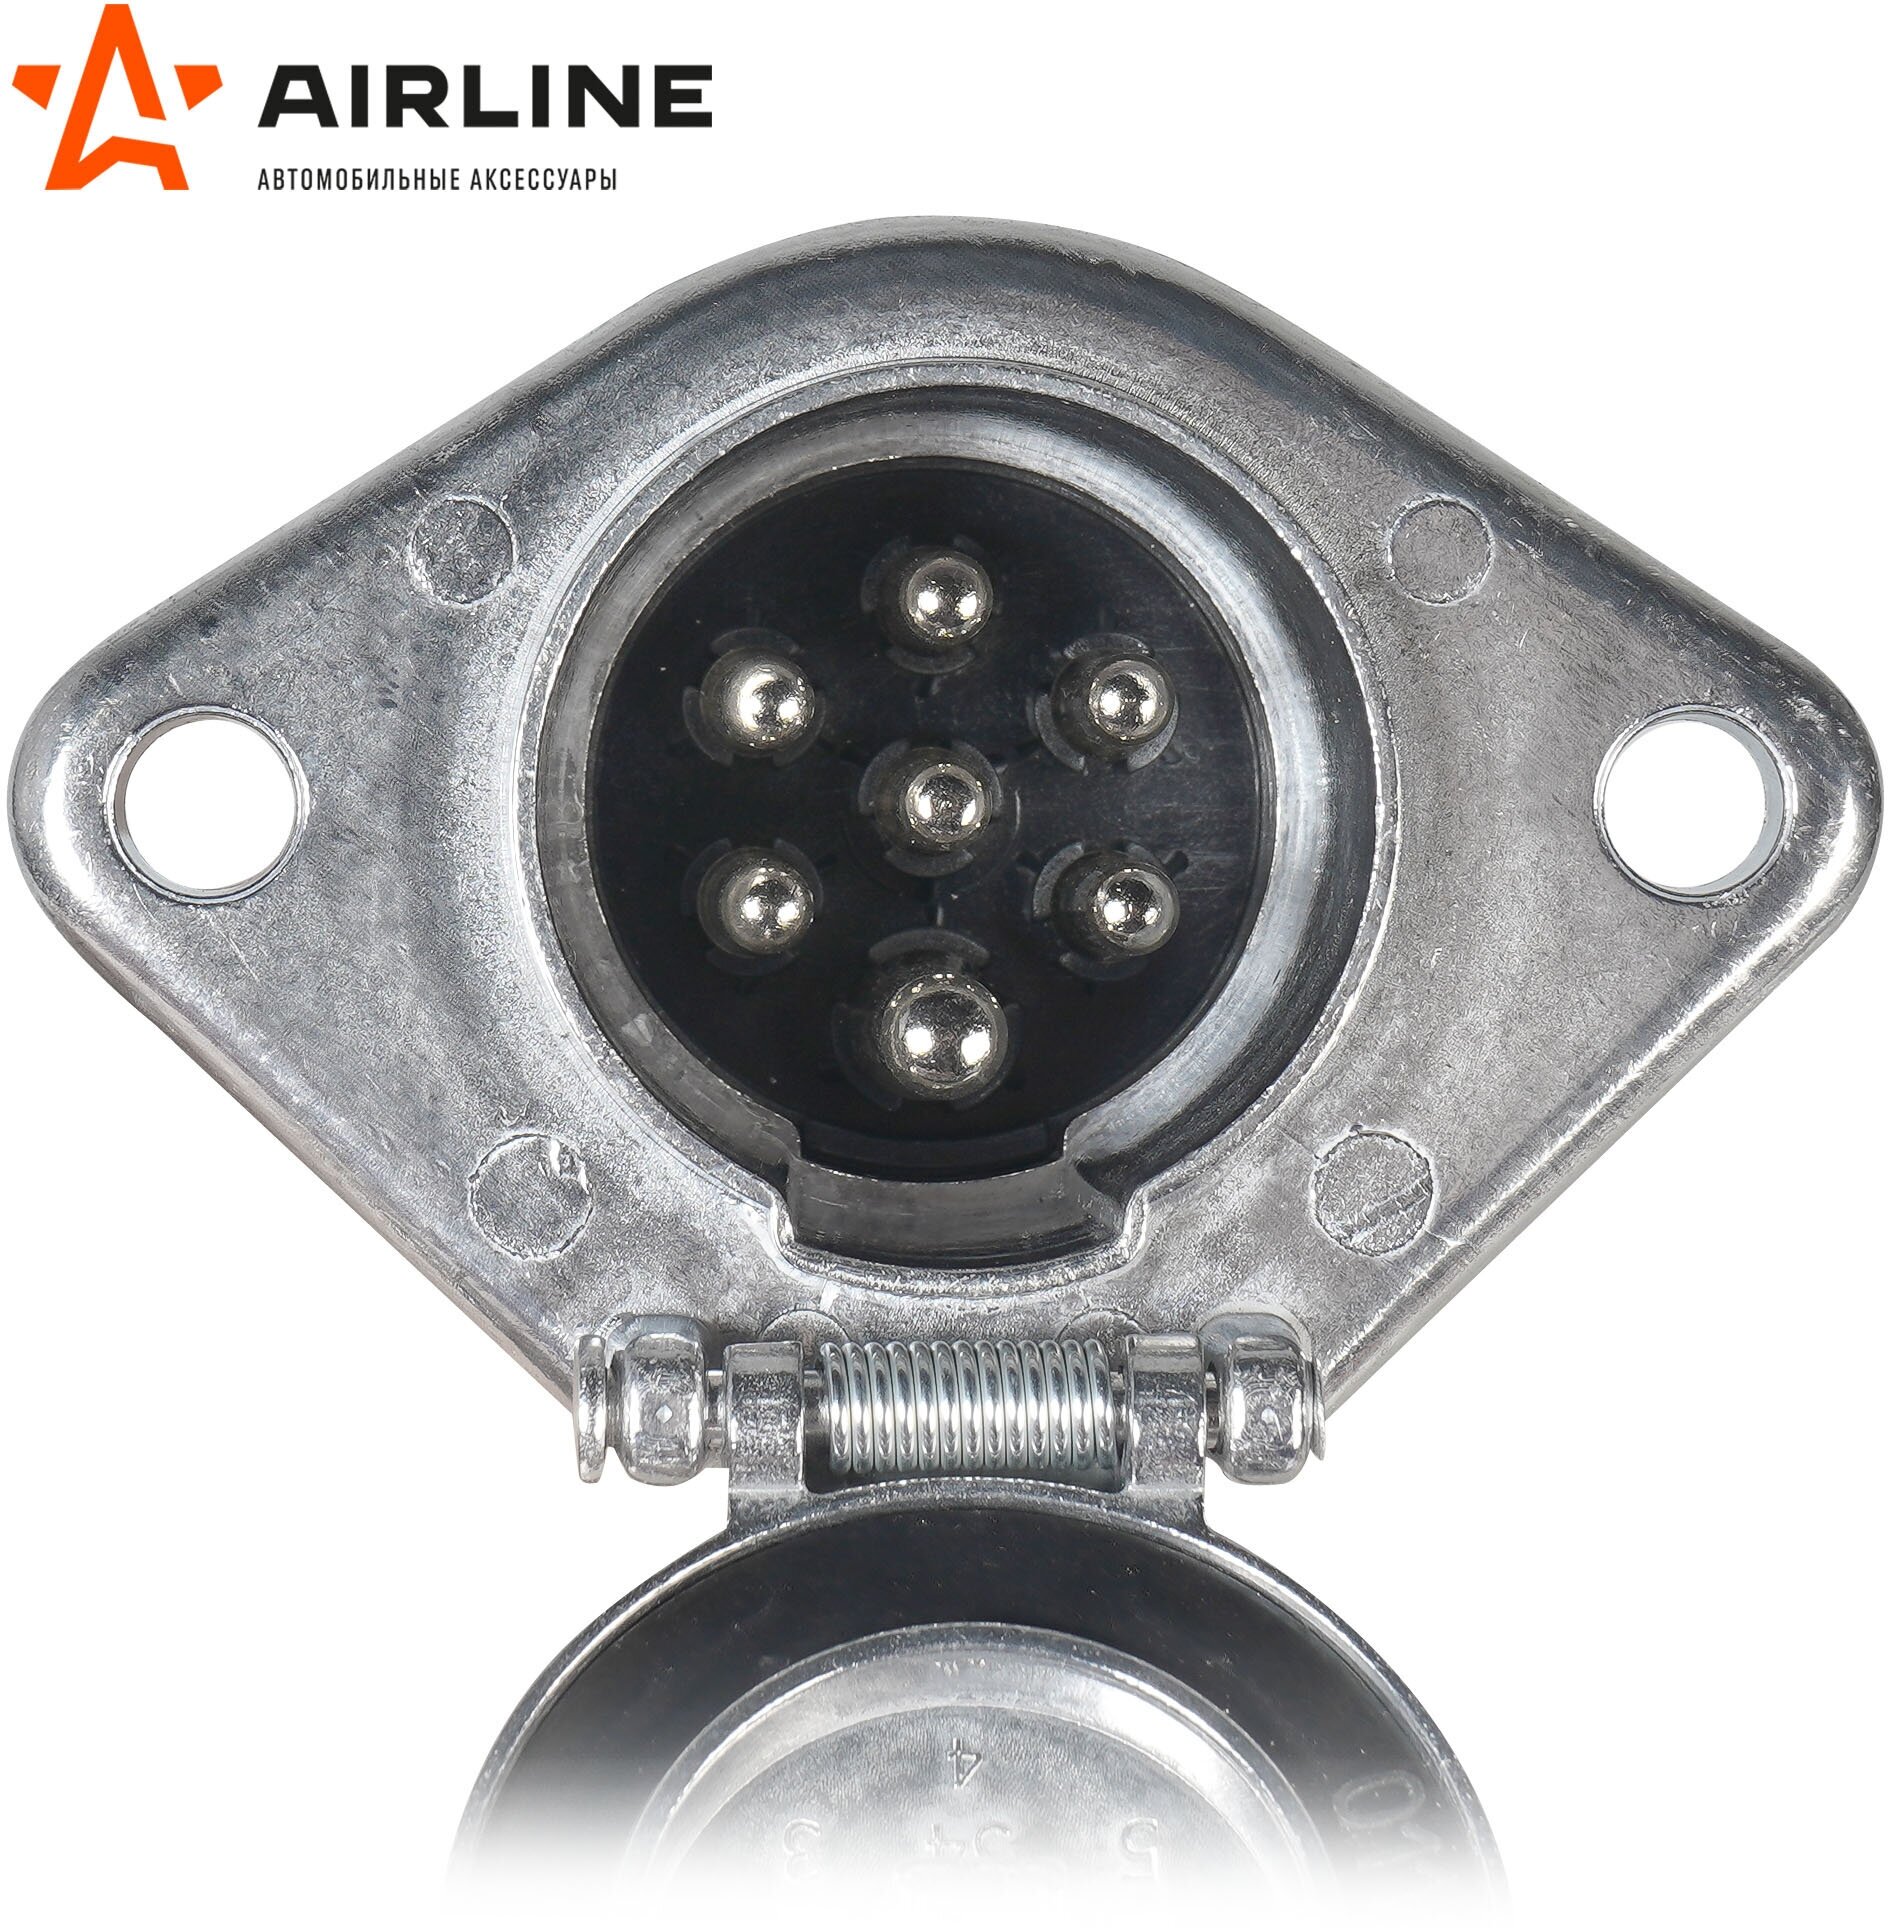 Разъем прицепа электрический (розетка) 24В тип-N 7 контактов металл (AIRLINE) ATE-32